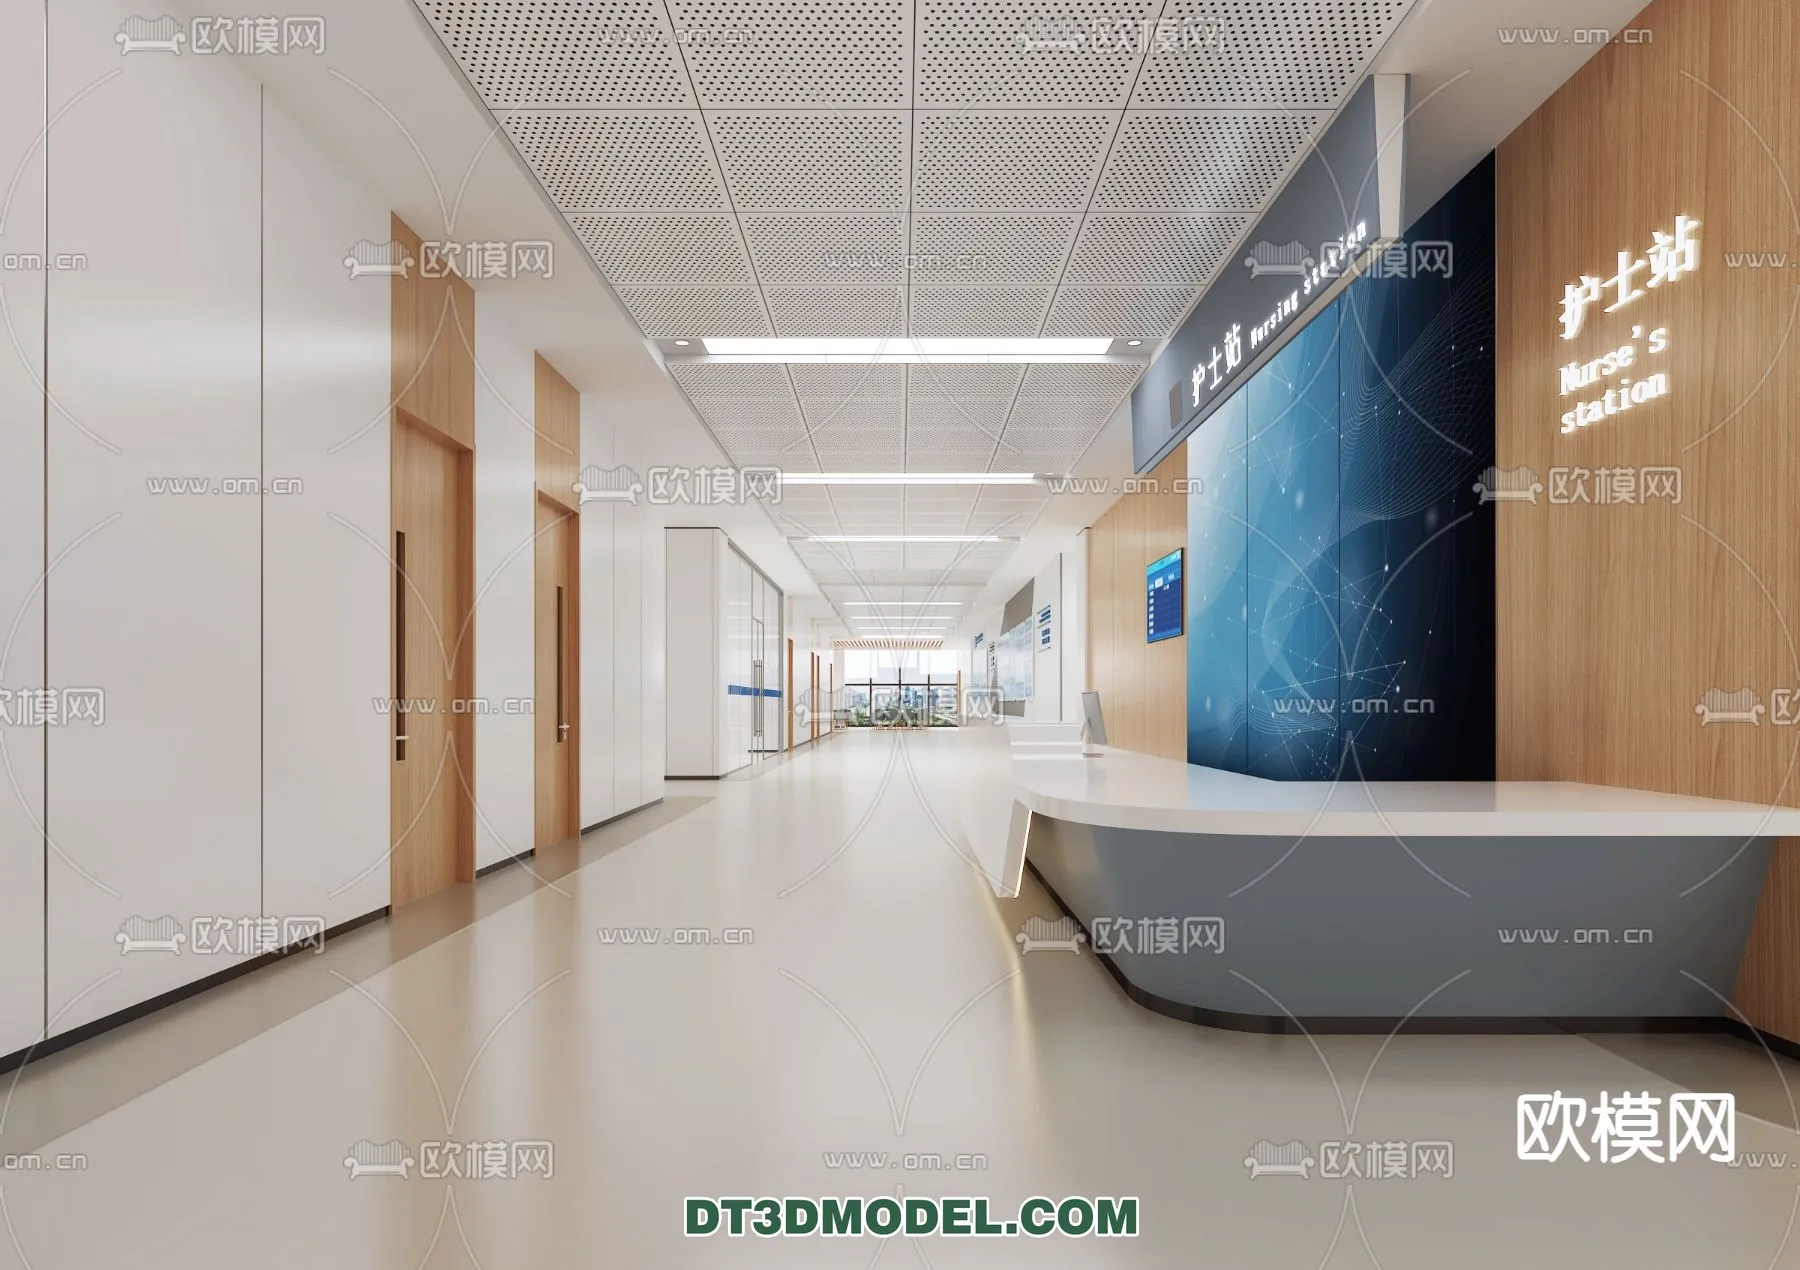 HOSPITAL 3D SCENES – MODERN – 0143